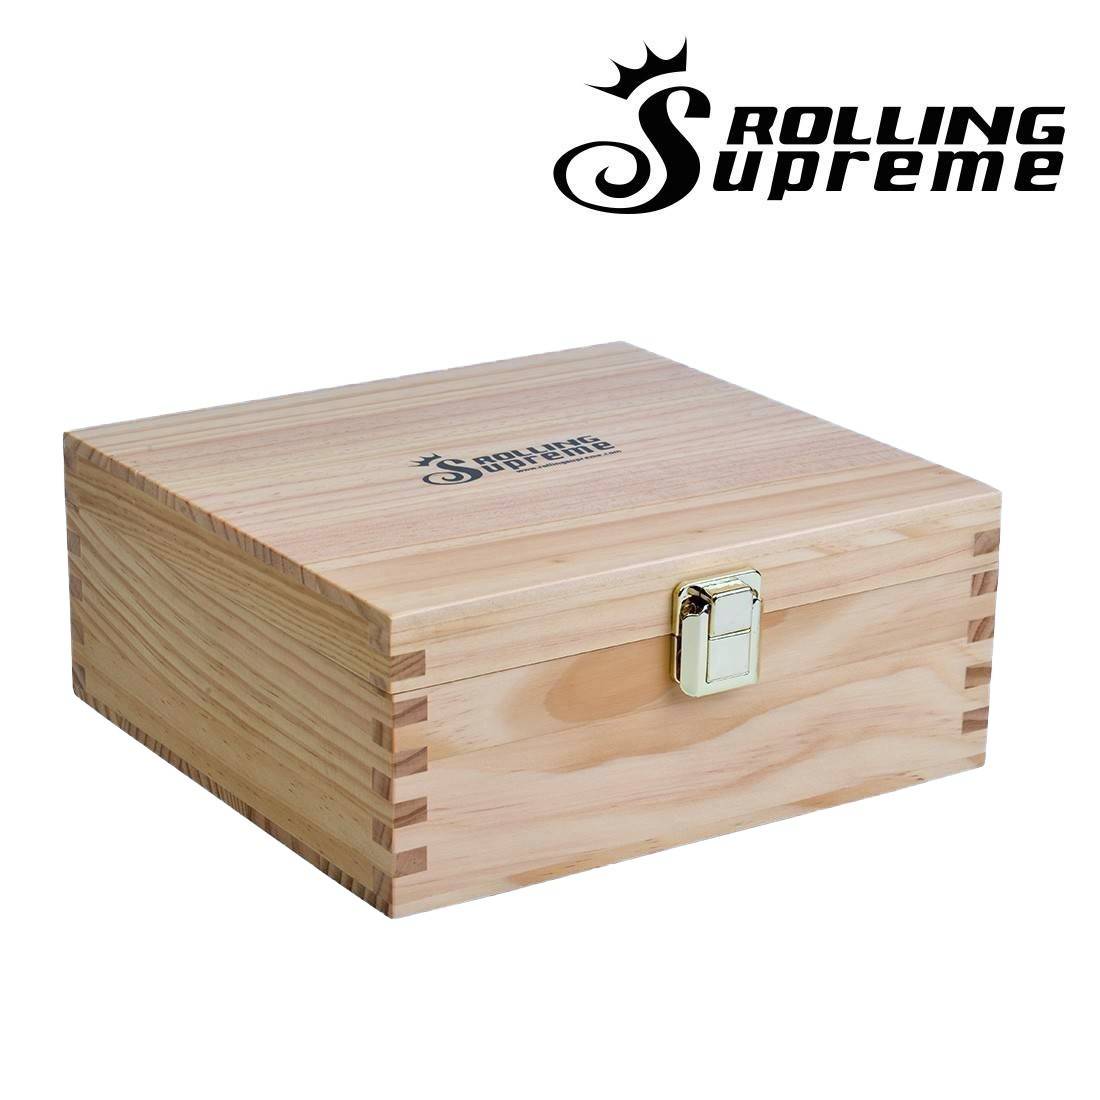 Sifter Box - boite bois - rolling supreme 